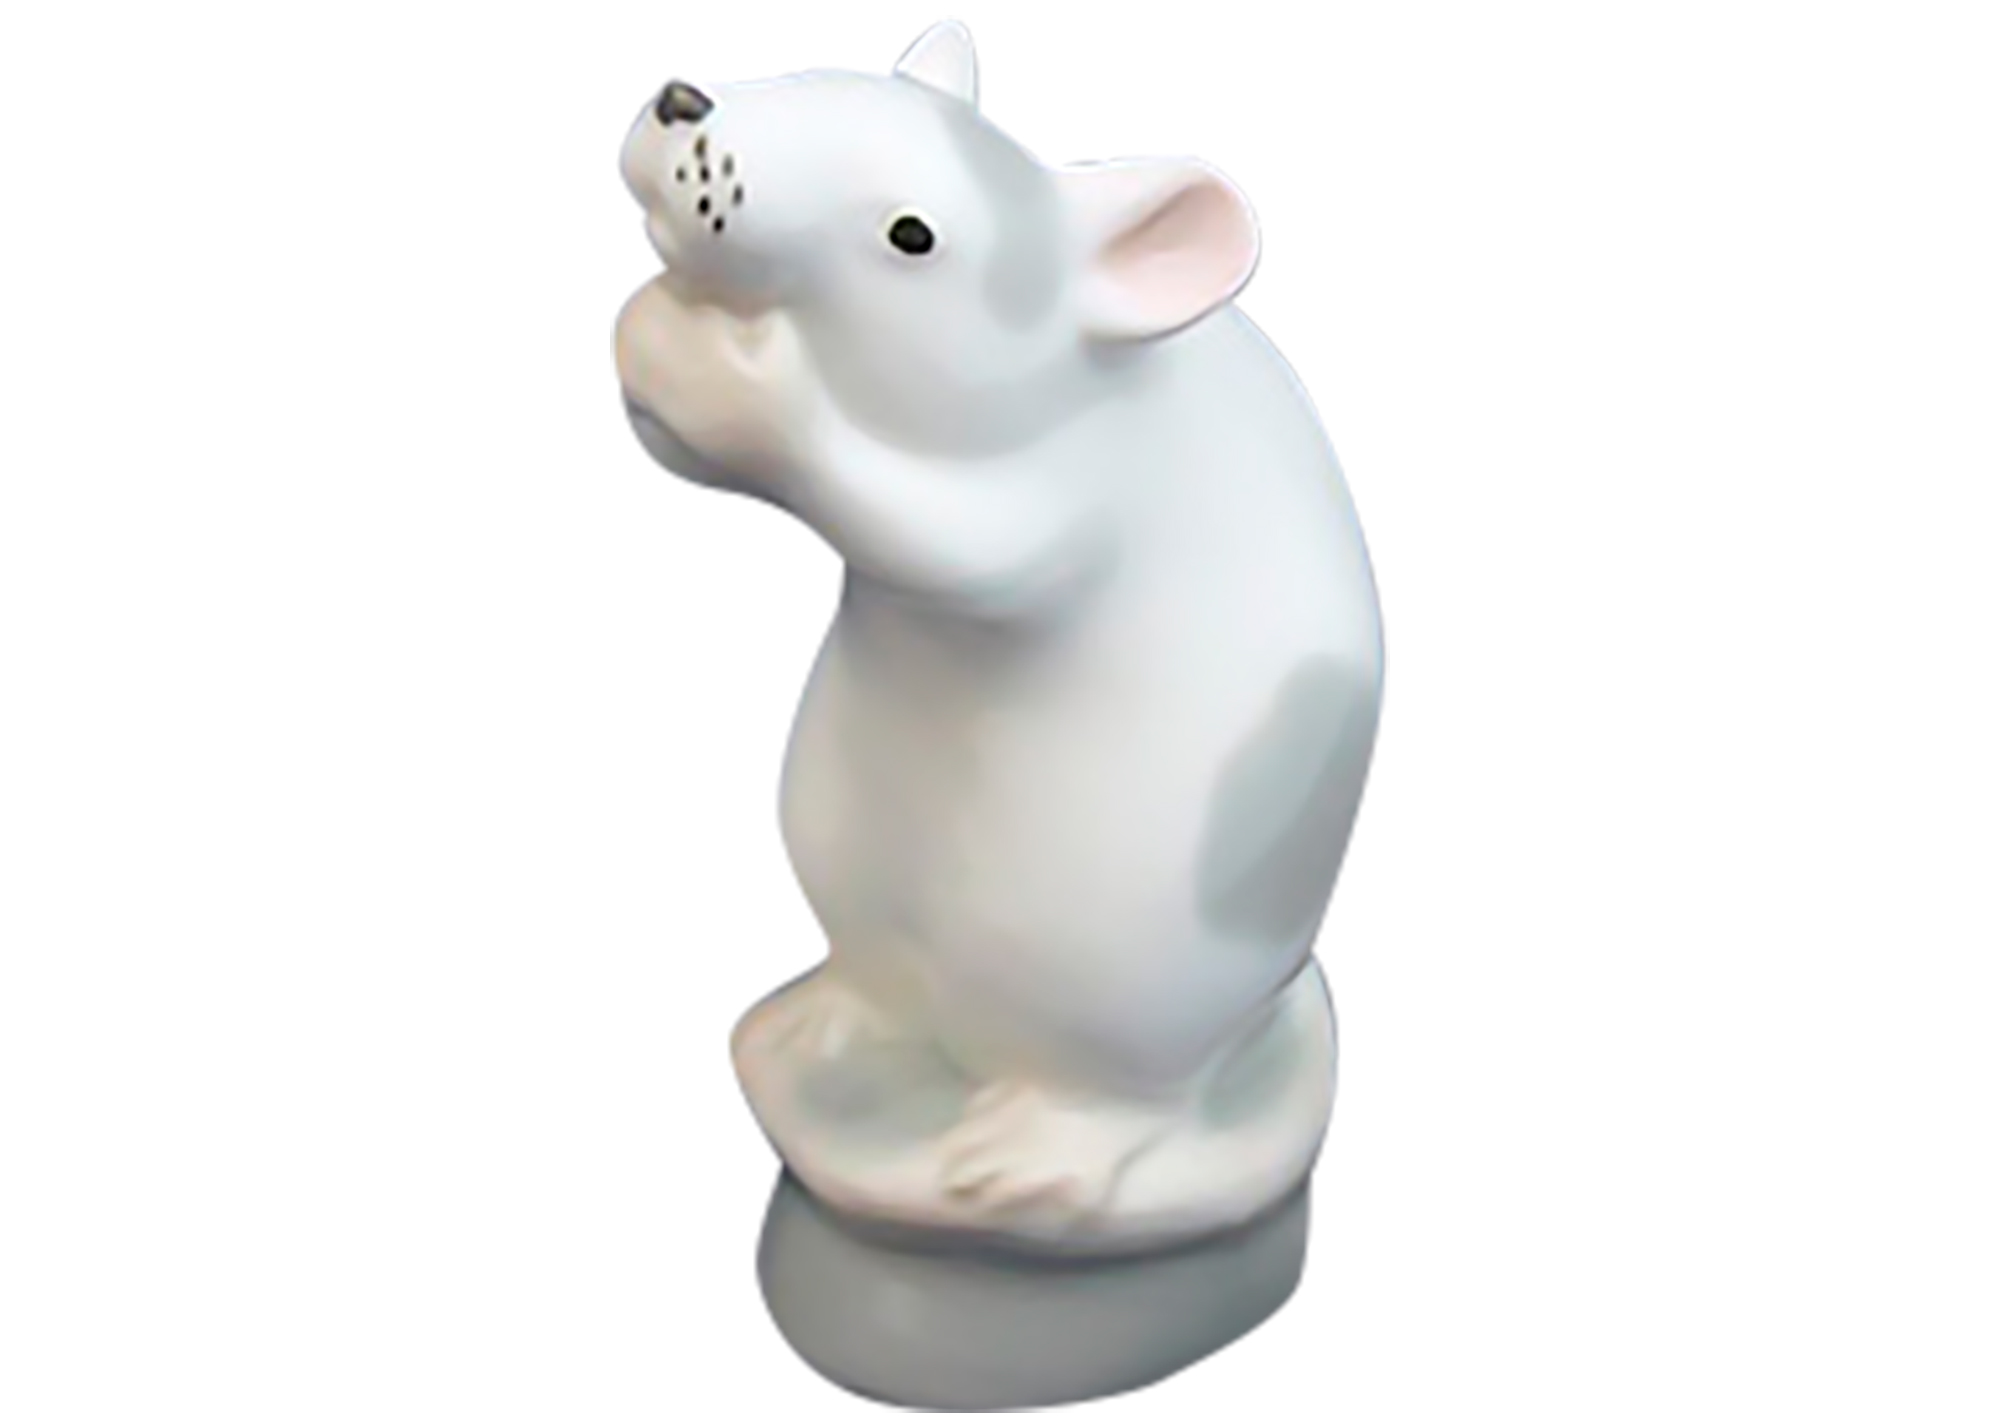 Buy Pleading Porcelain Mouse Figurine at GoldenCockerel.com